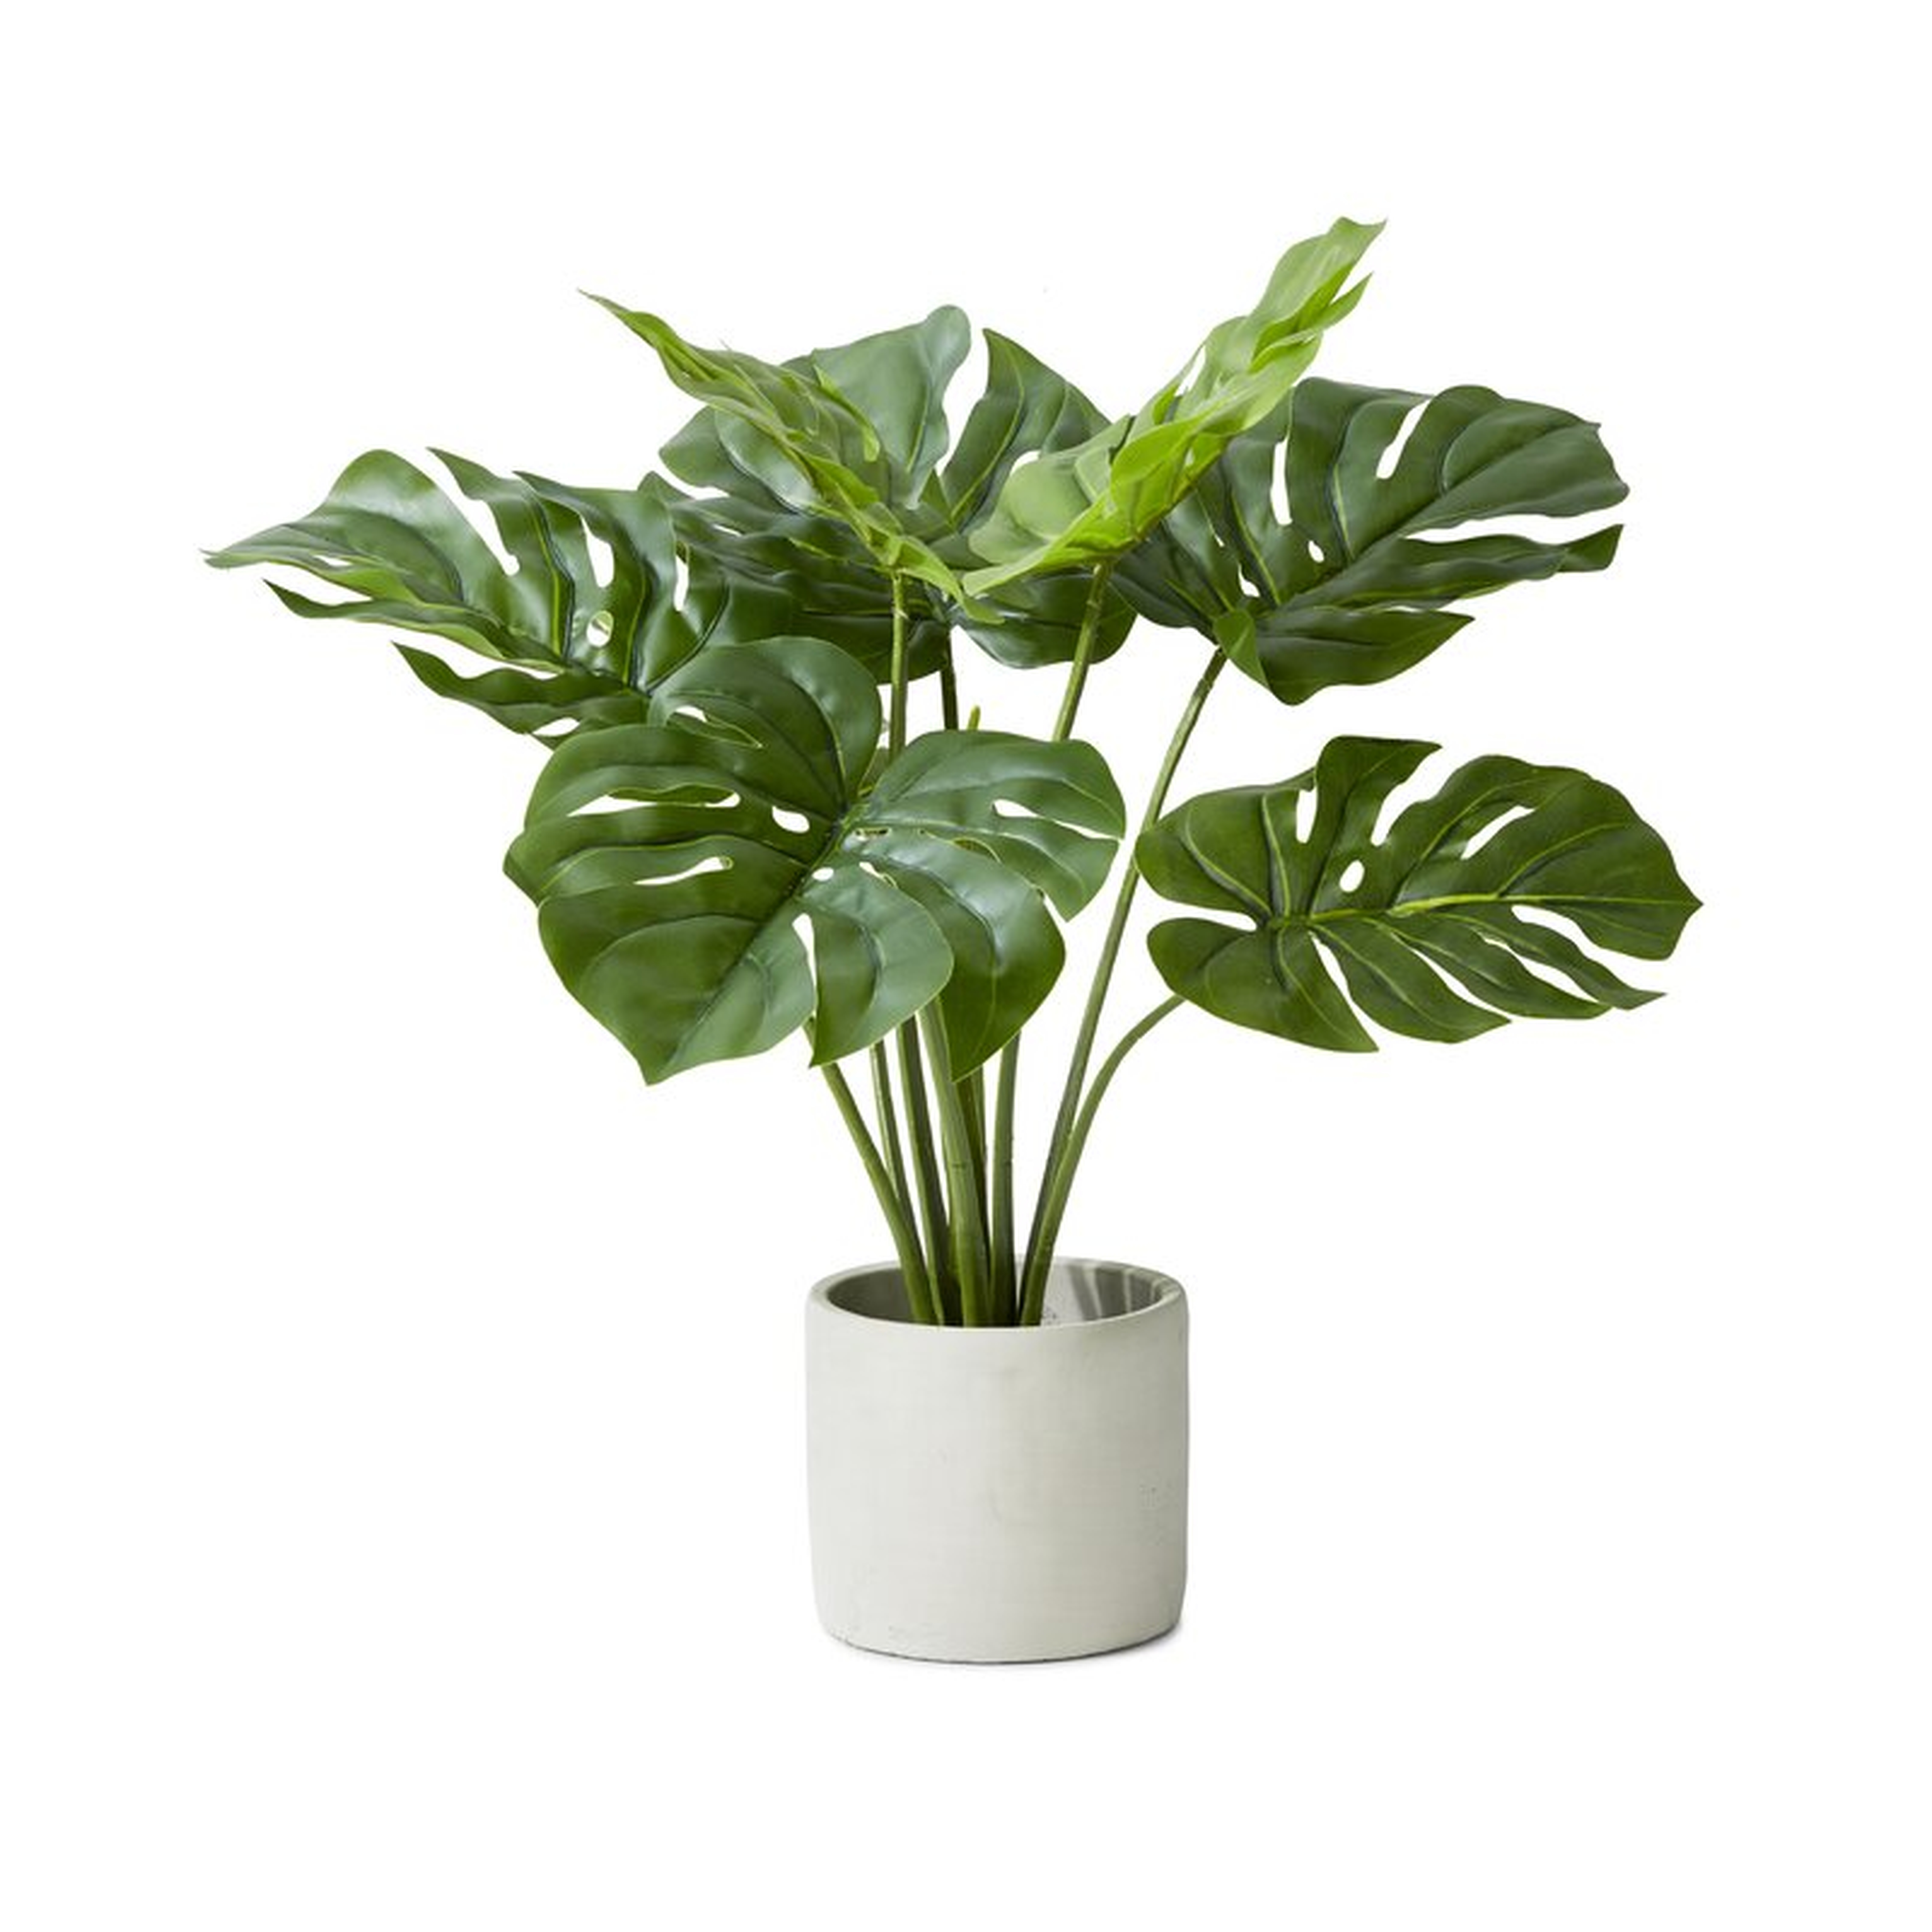 21" Evergreen Plant in Pot - Wayfair